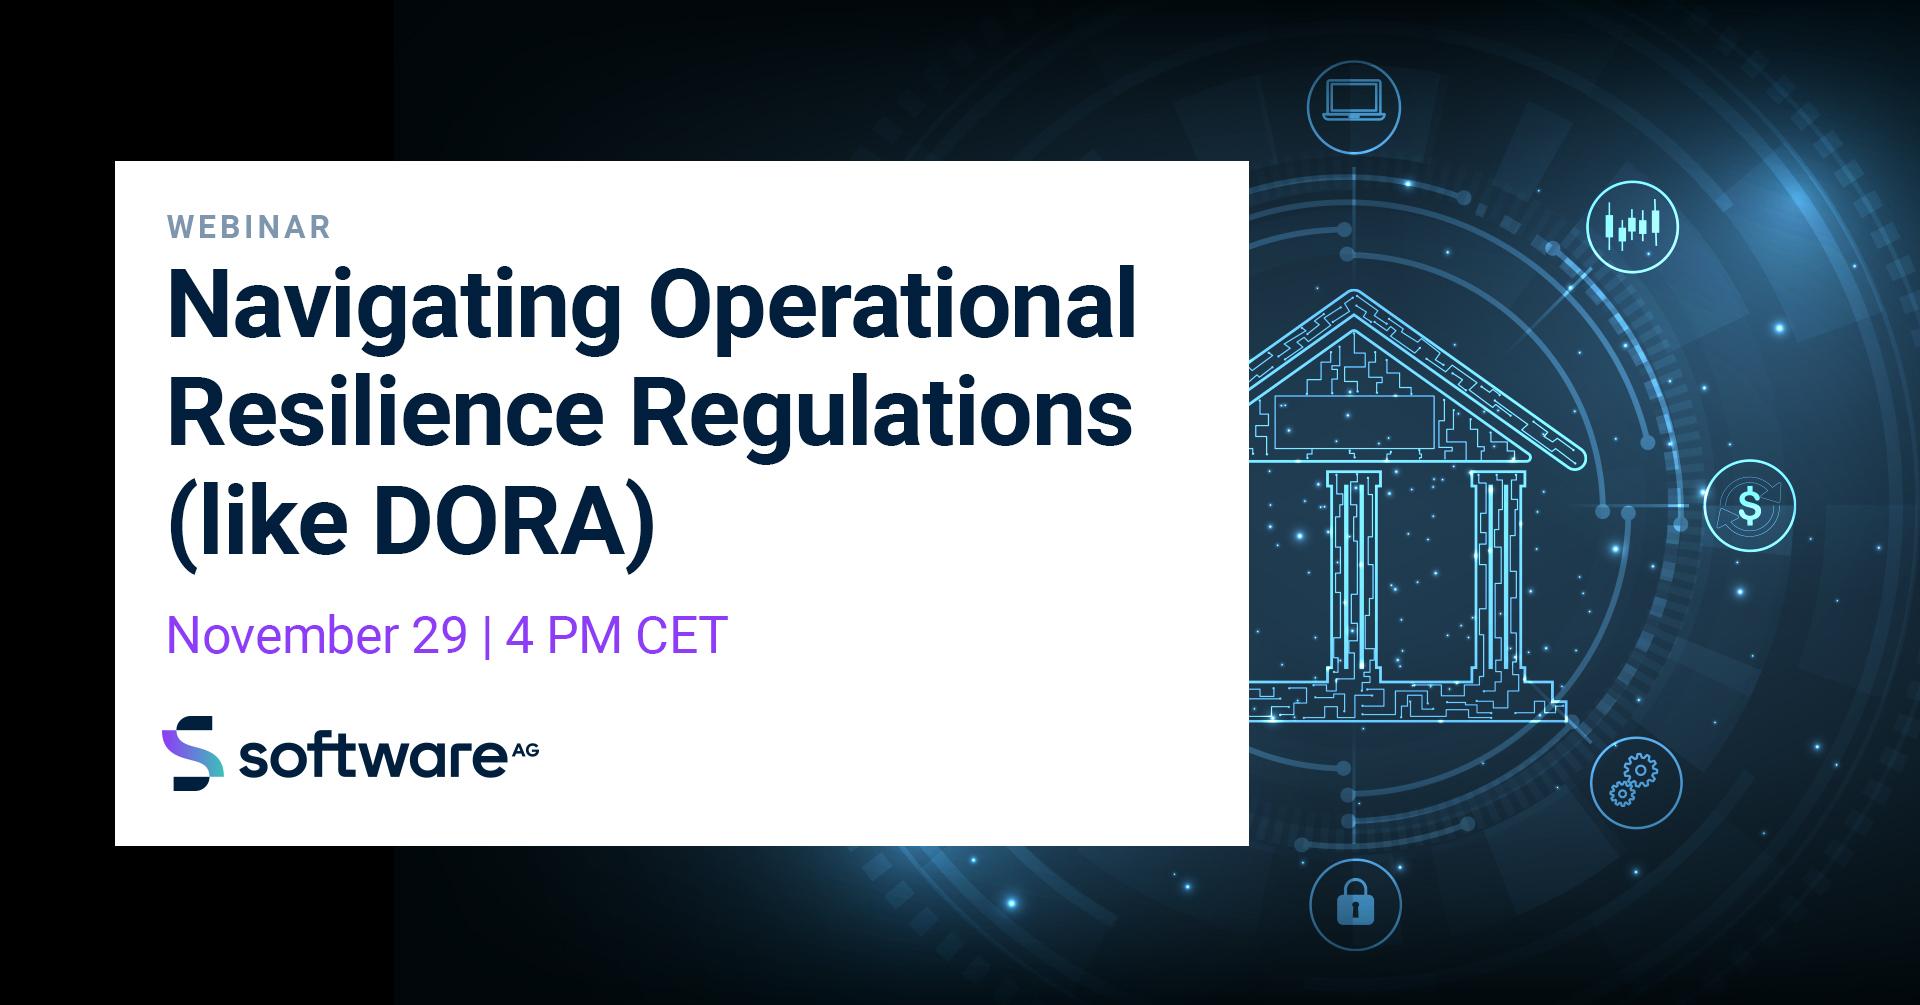 Webinar: Navigating Operational Resilience Regulations (like DORA)